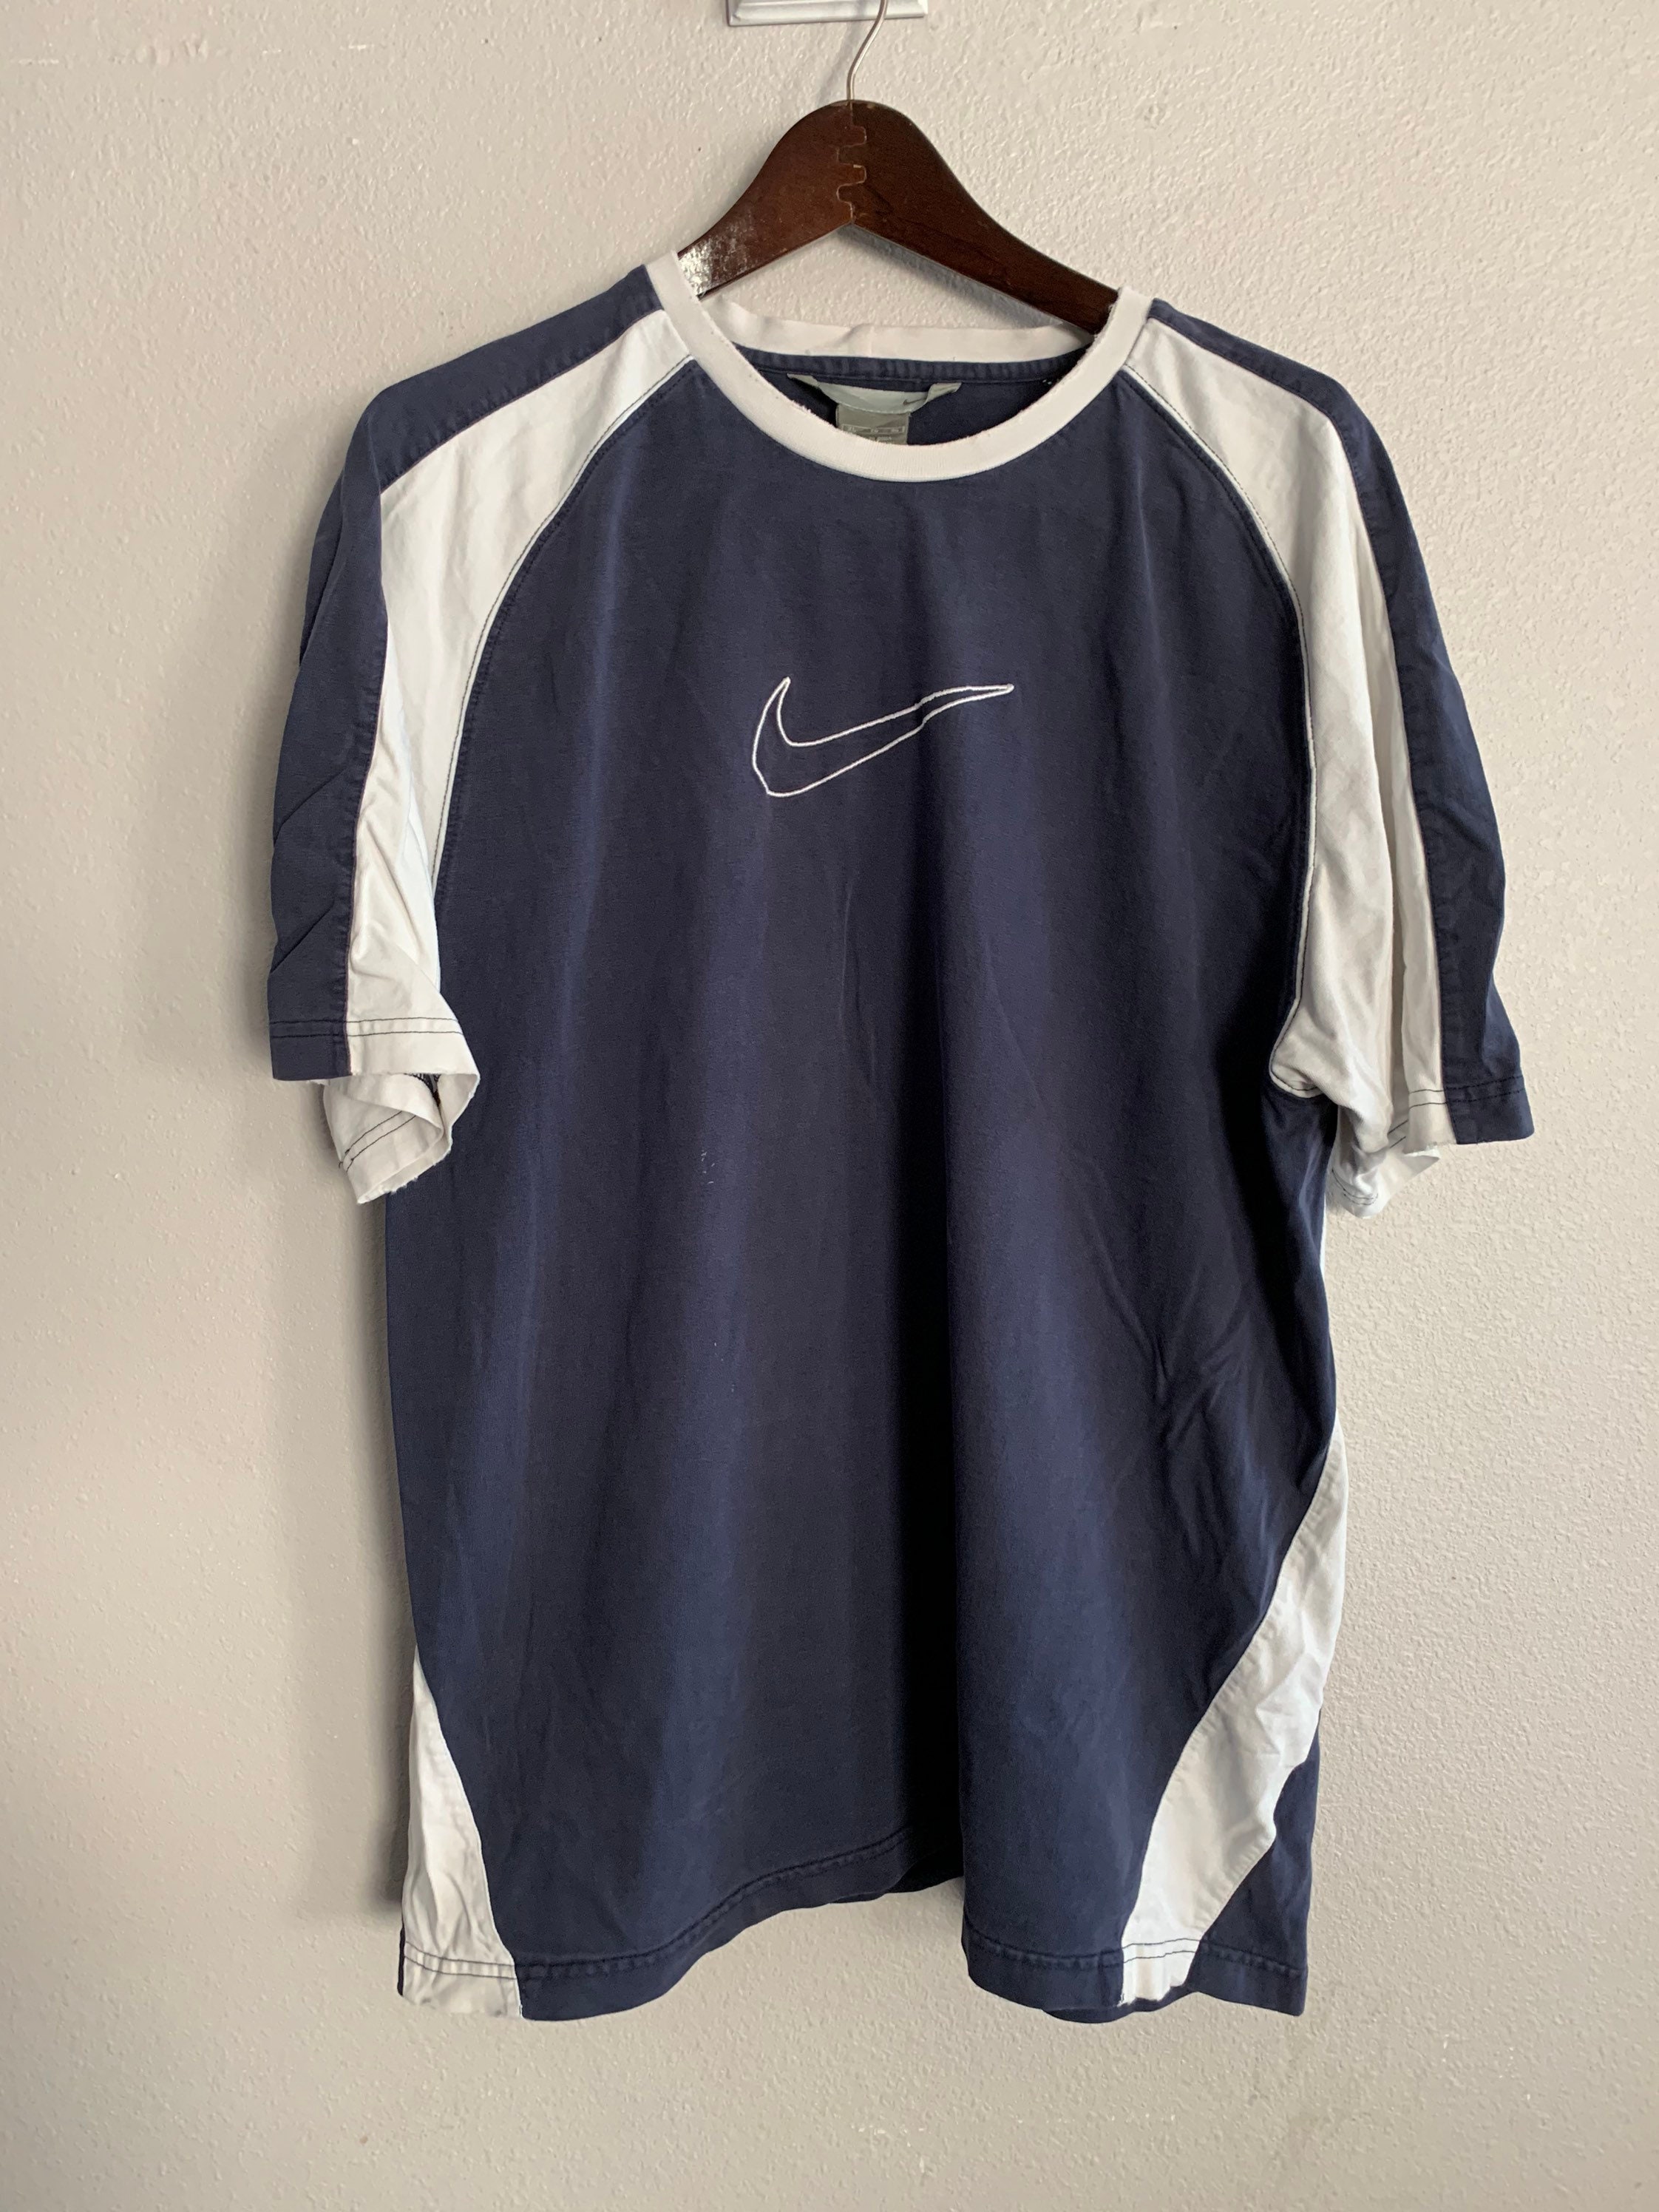 Vintage Nike center swoosh t shirt size XL | Etsy